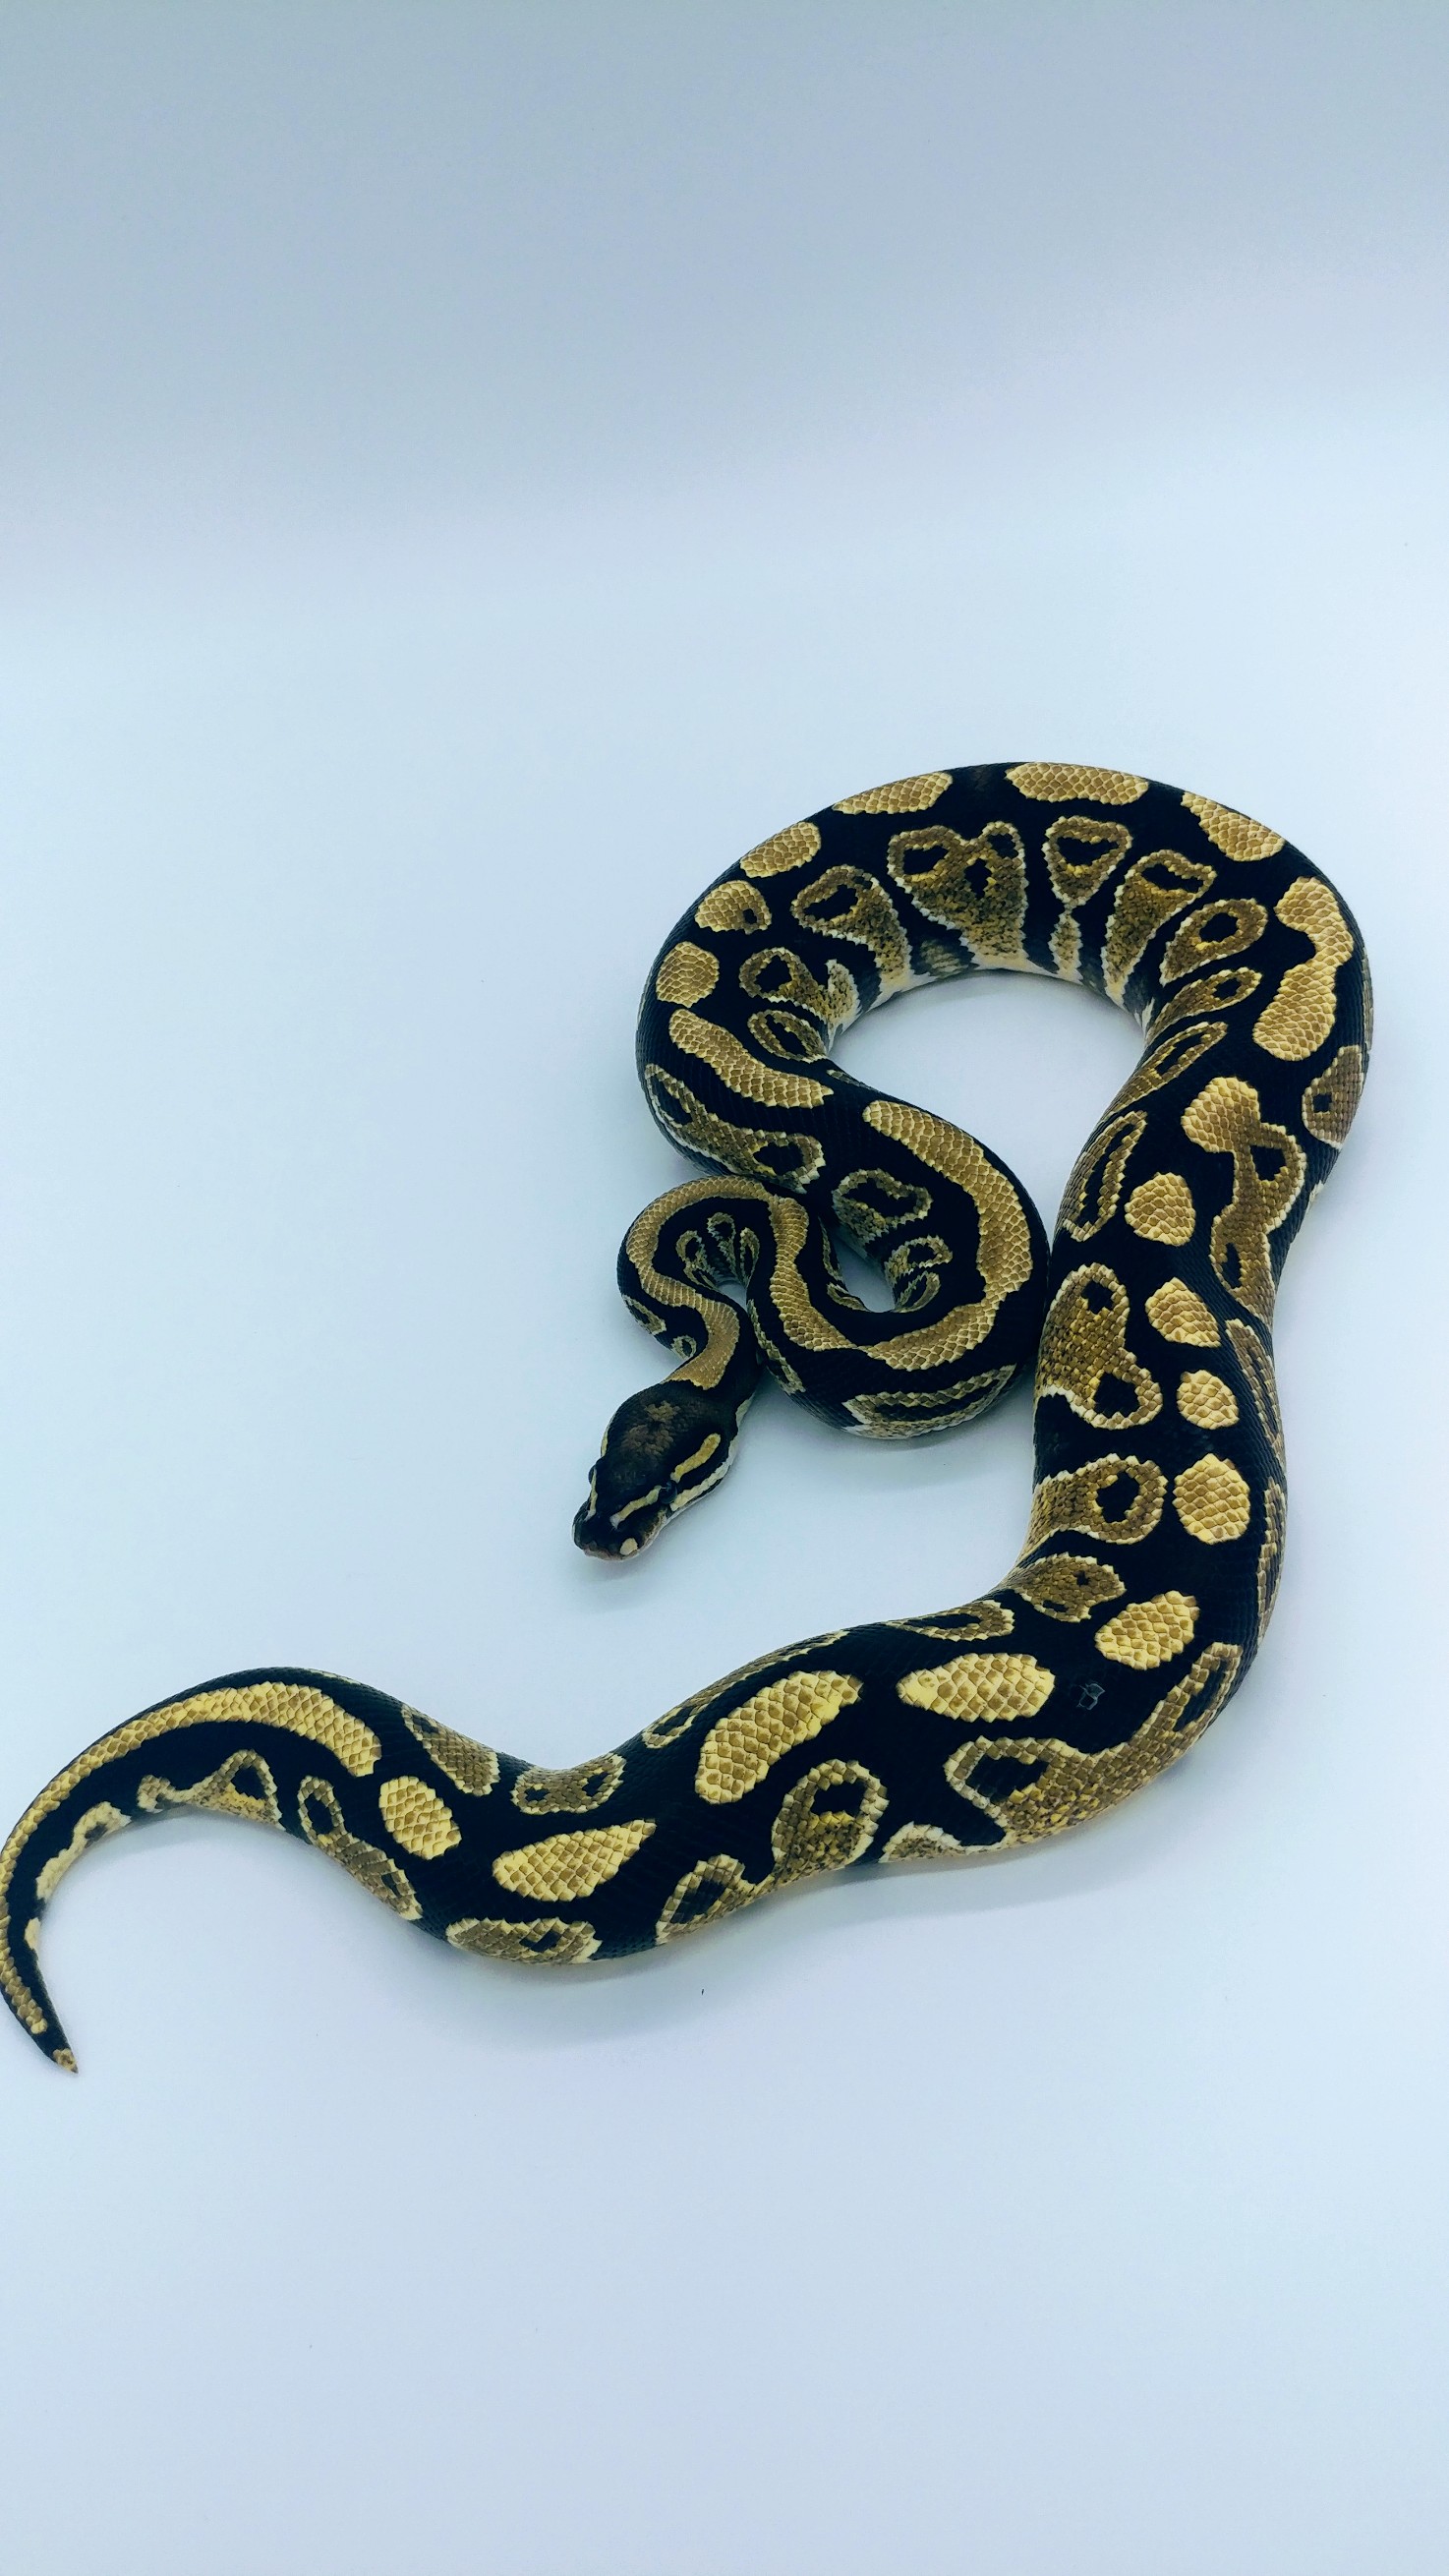 Goldblush Ball Python by Jordan Brown Reptiles